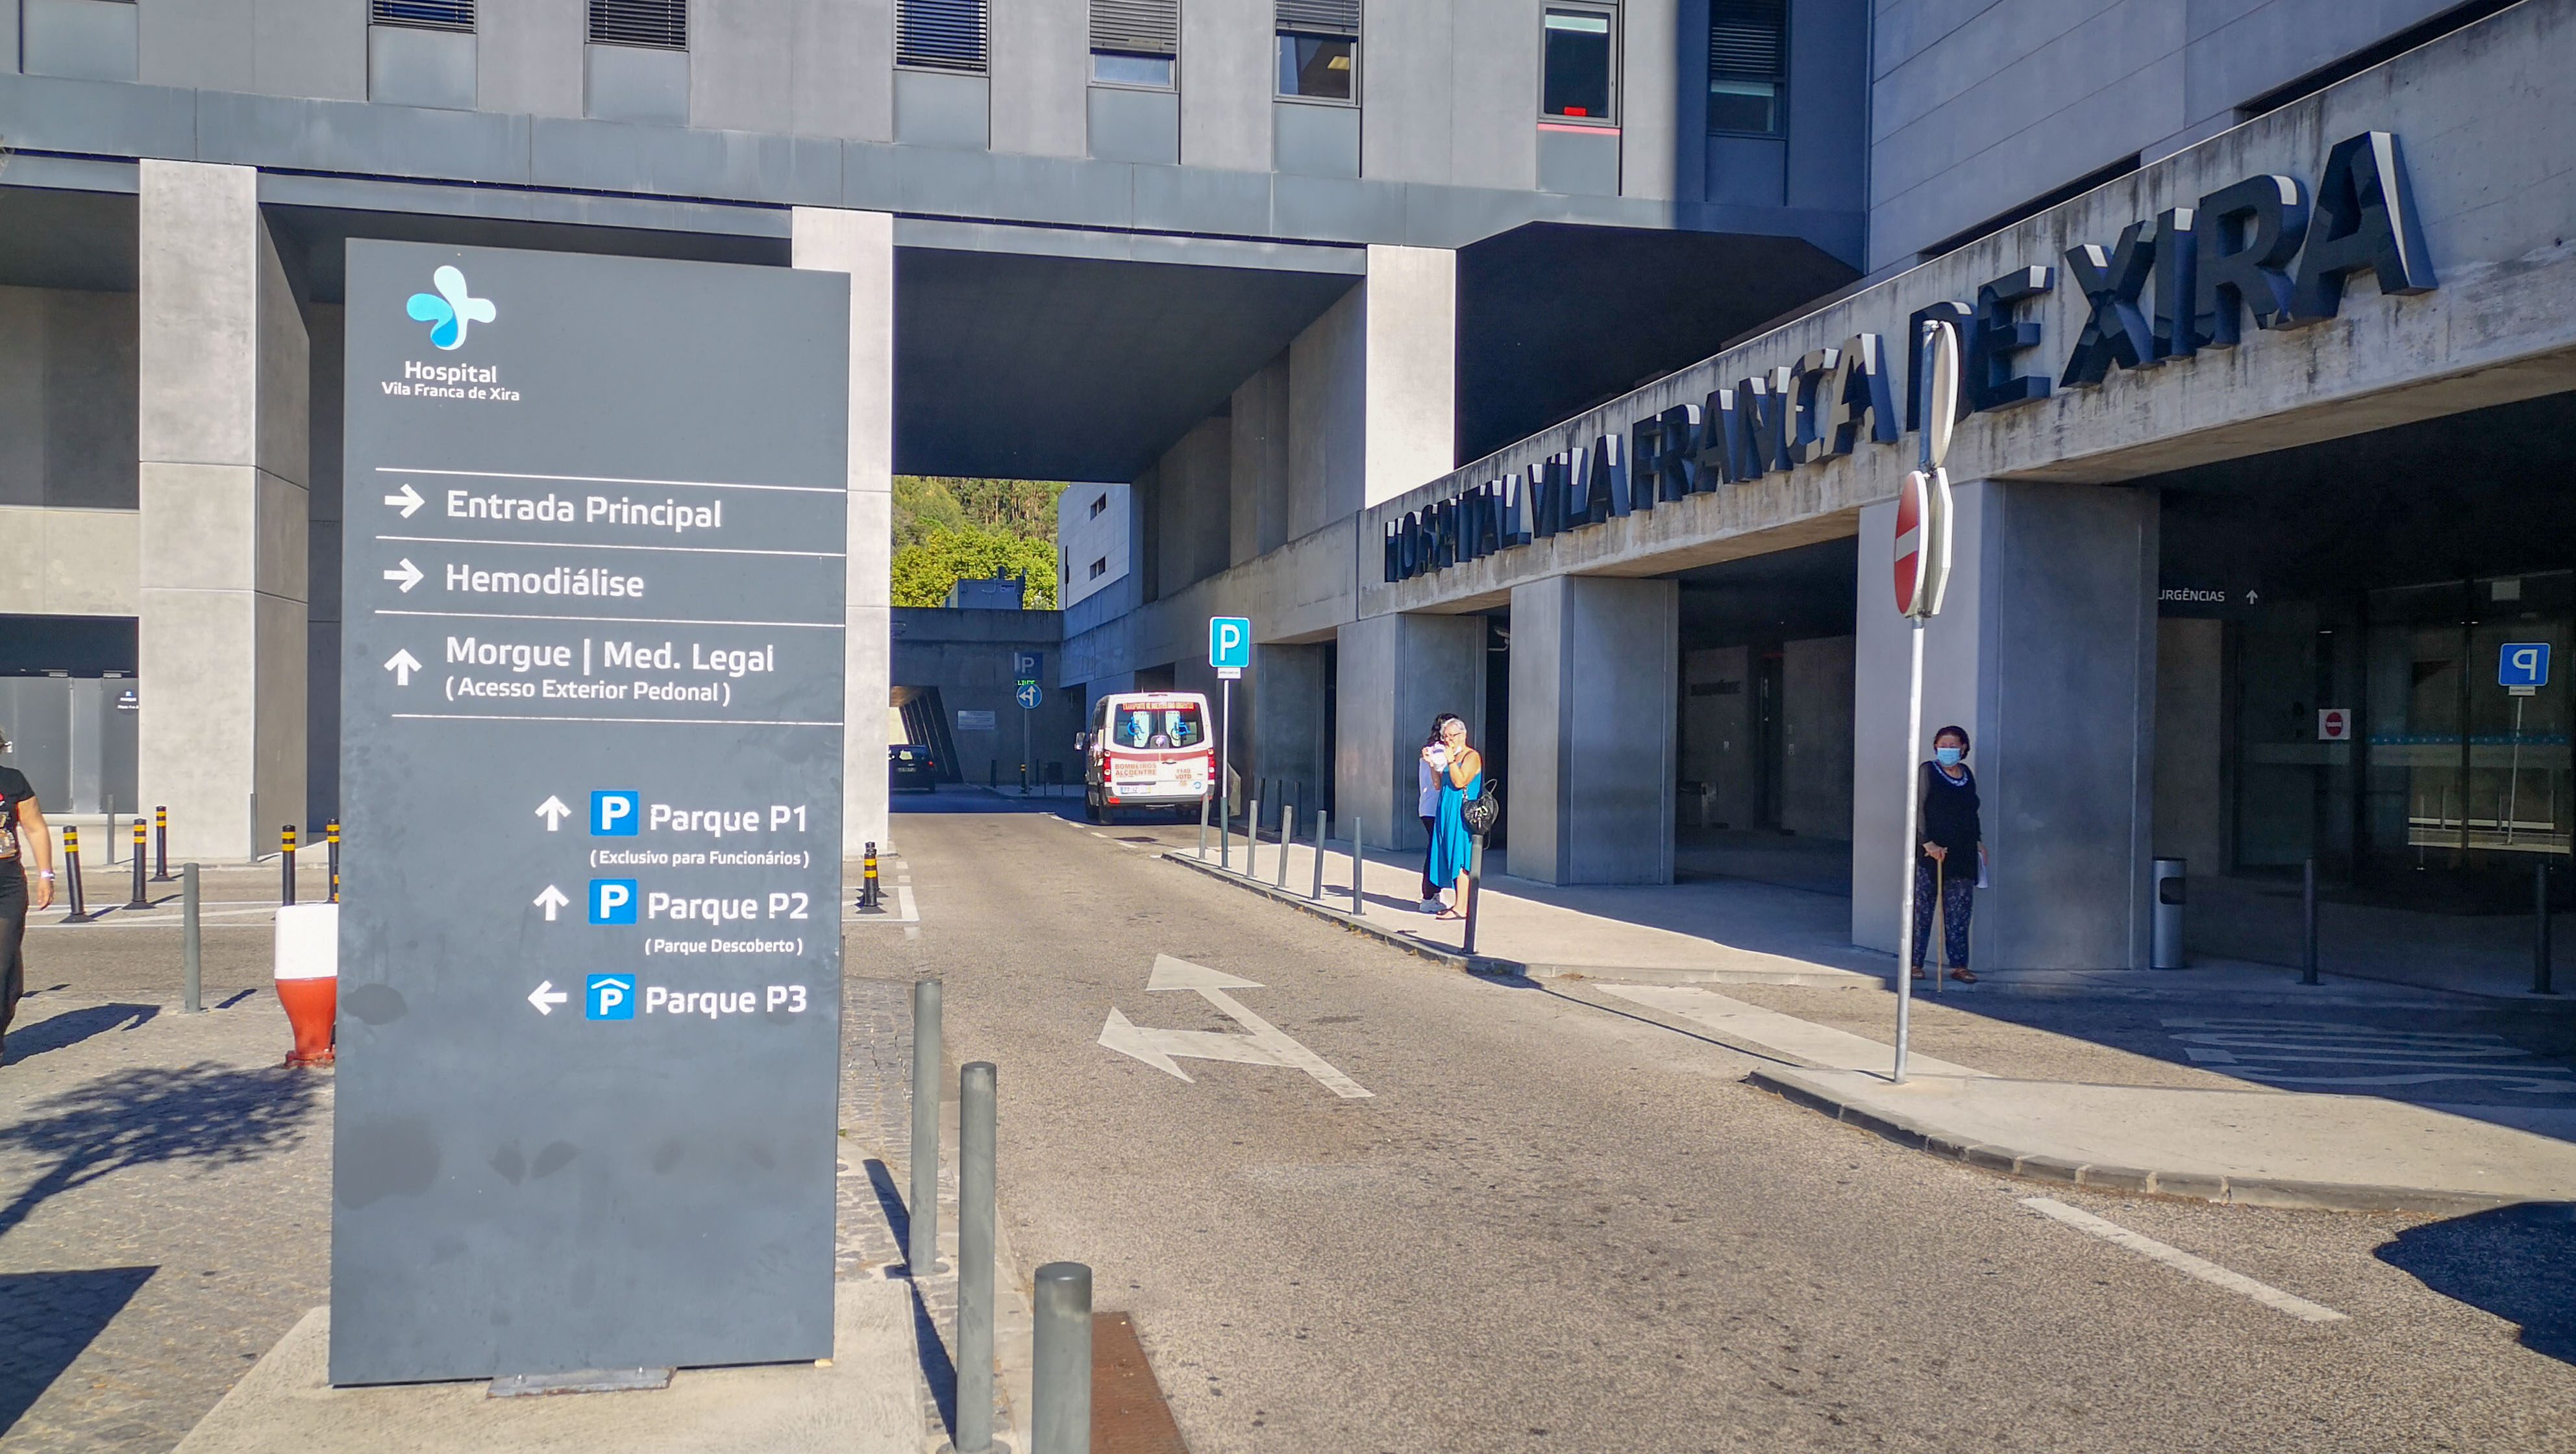 L’hôpital de Vila Franca démarrera en février avec 30 agents de santé supplémentaires – Notícias do Sorraia